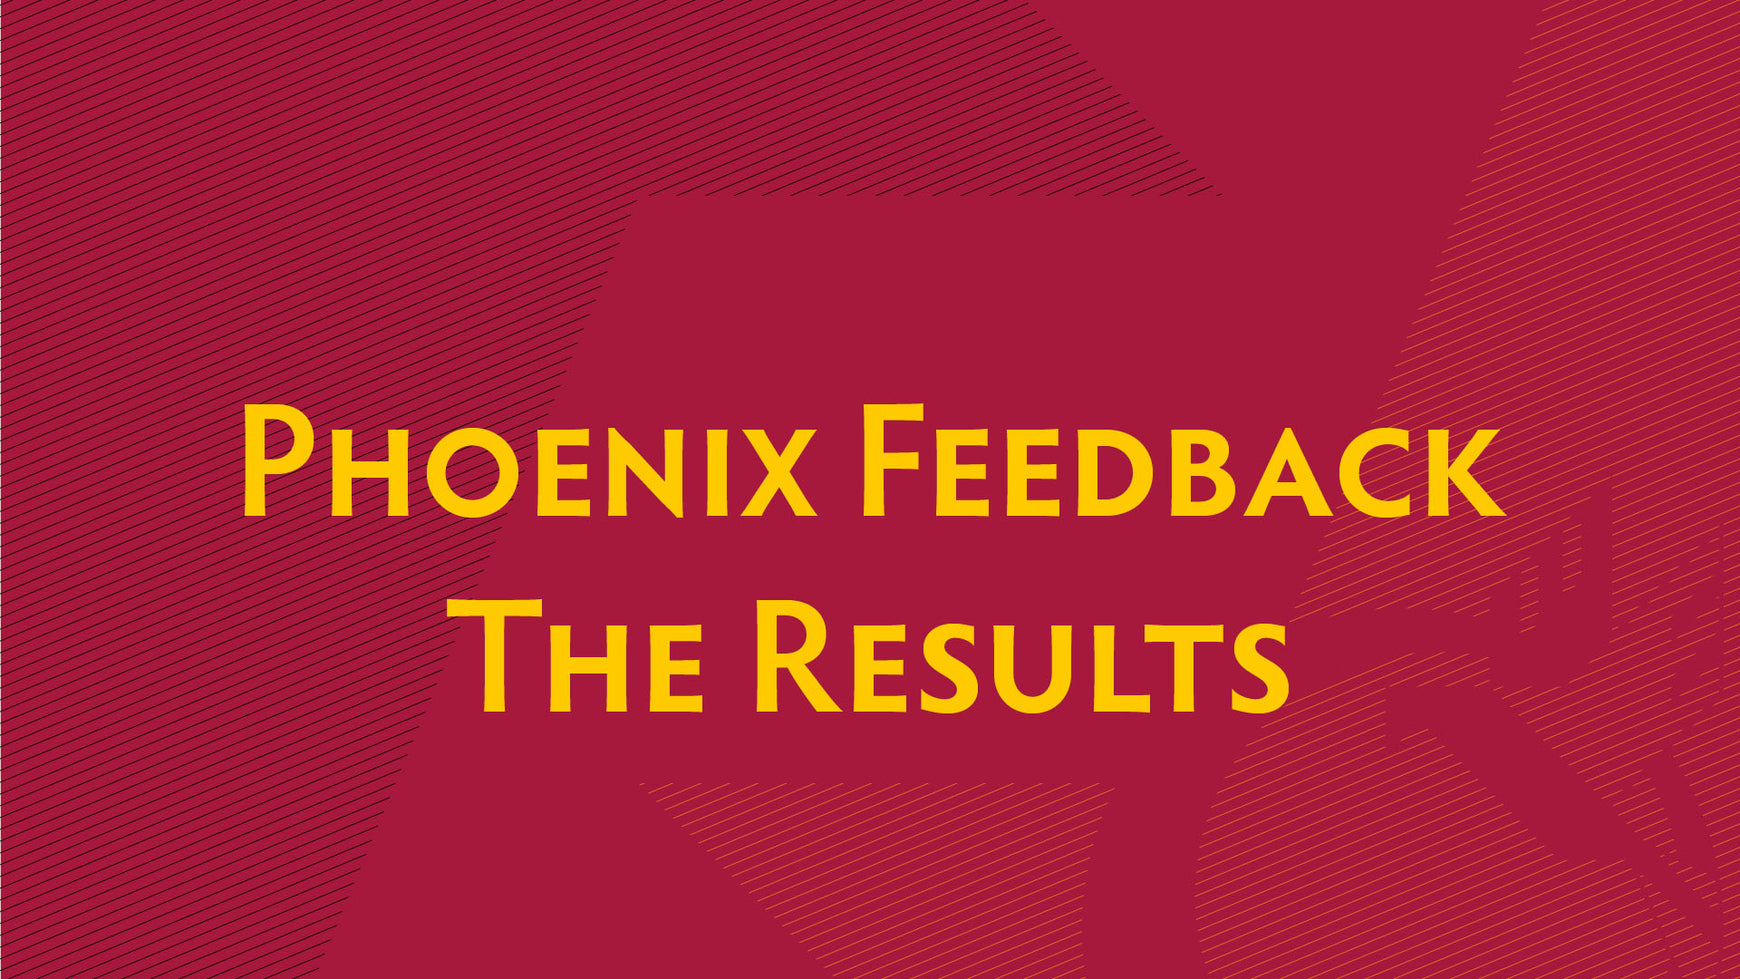 Phoenix Feedback: Takeaways and Changes